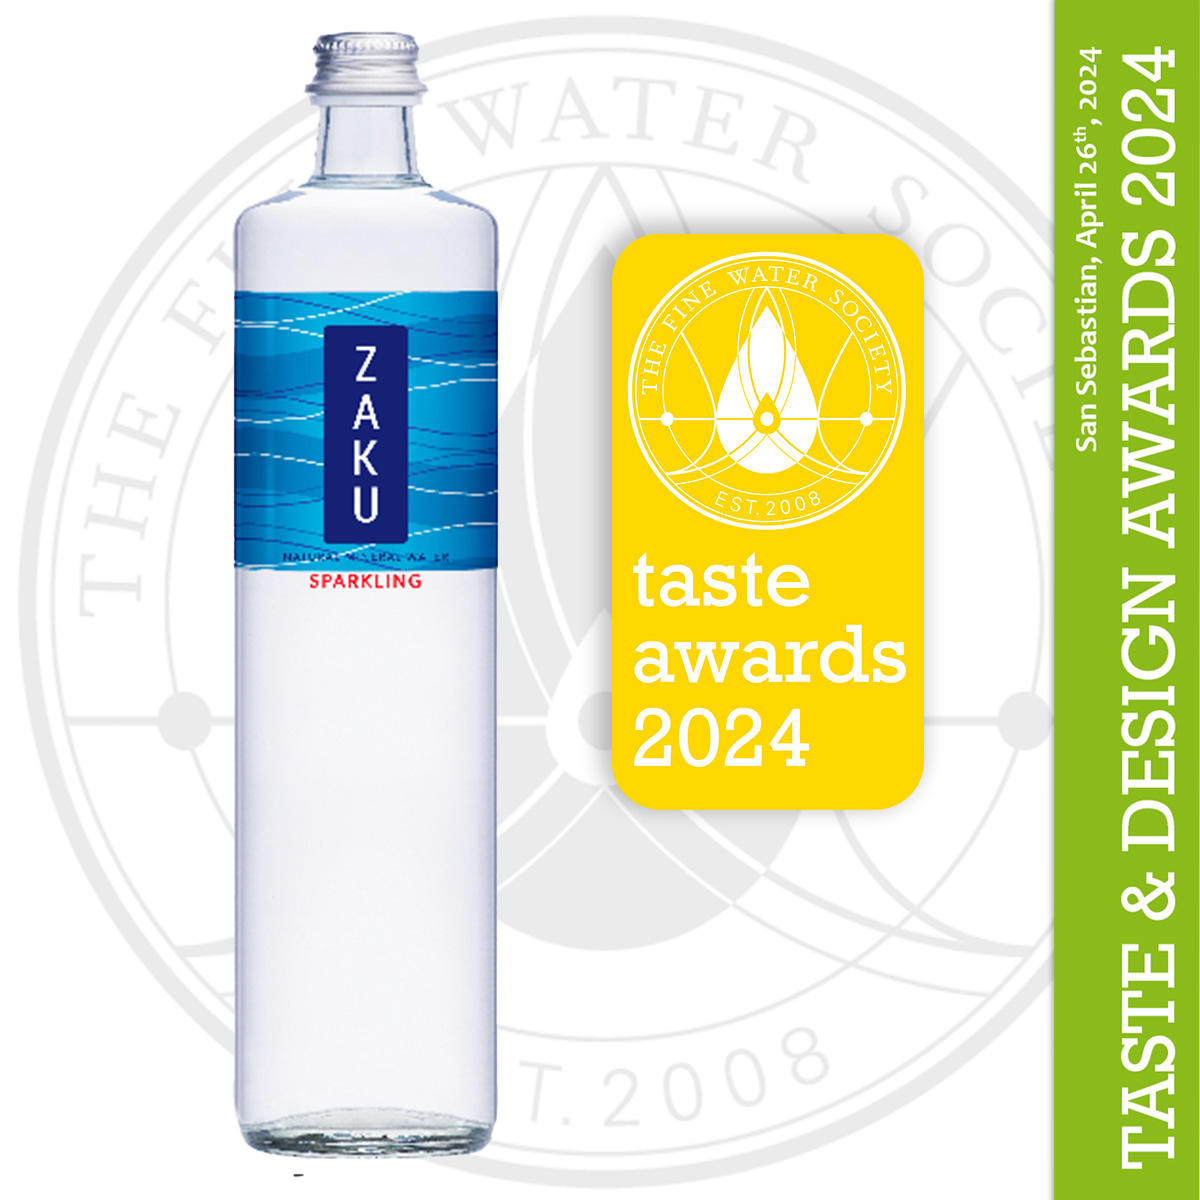 Zaku water